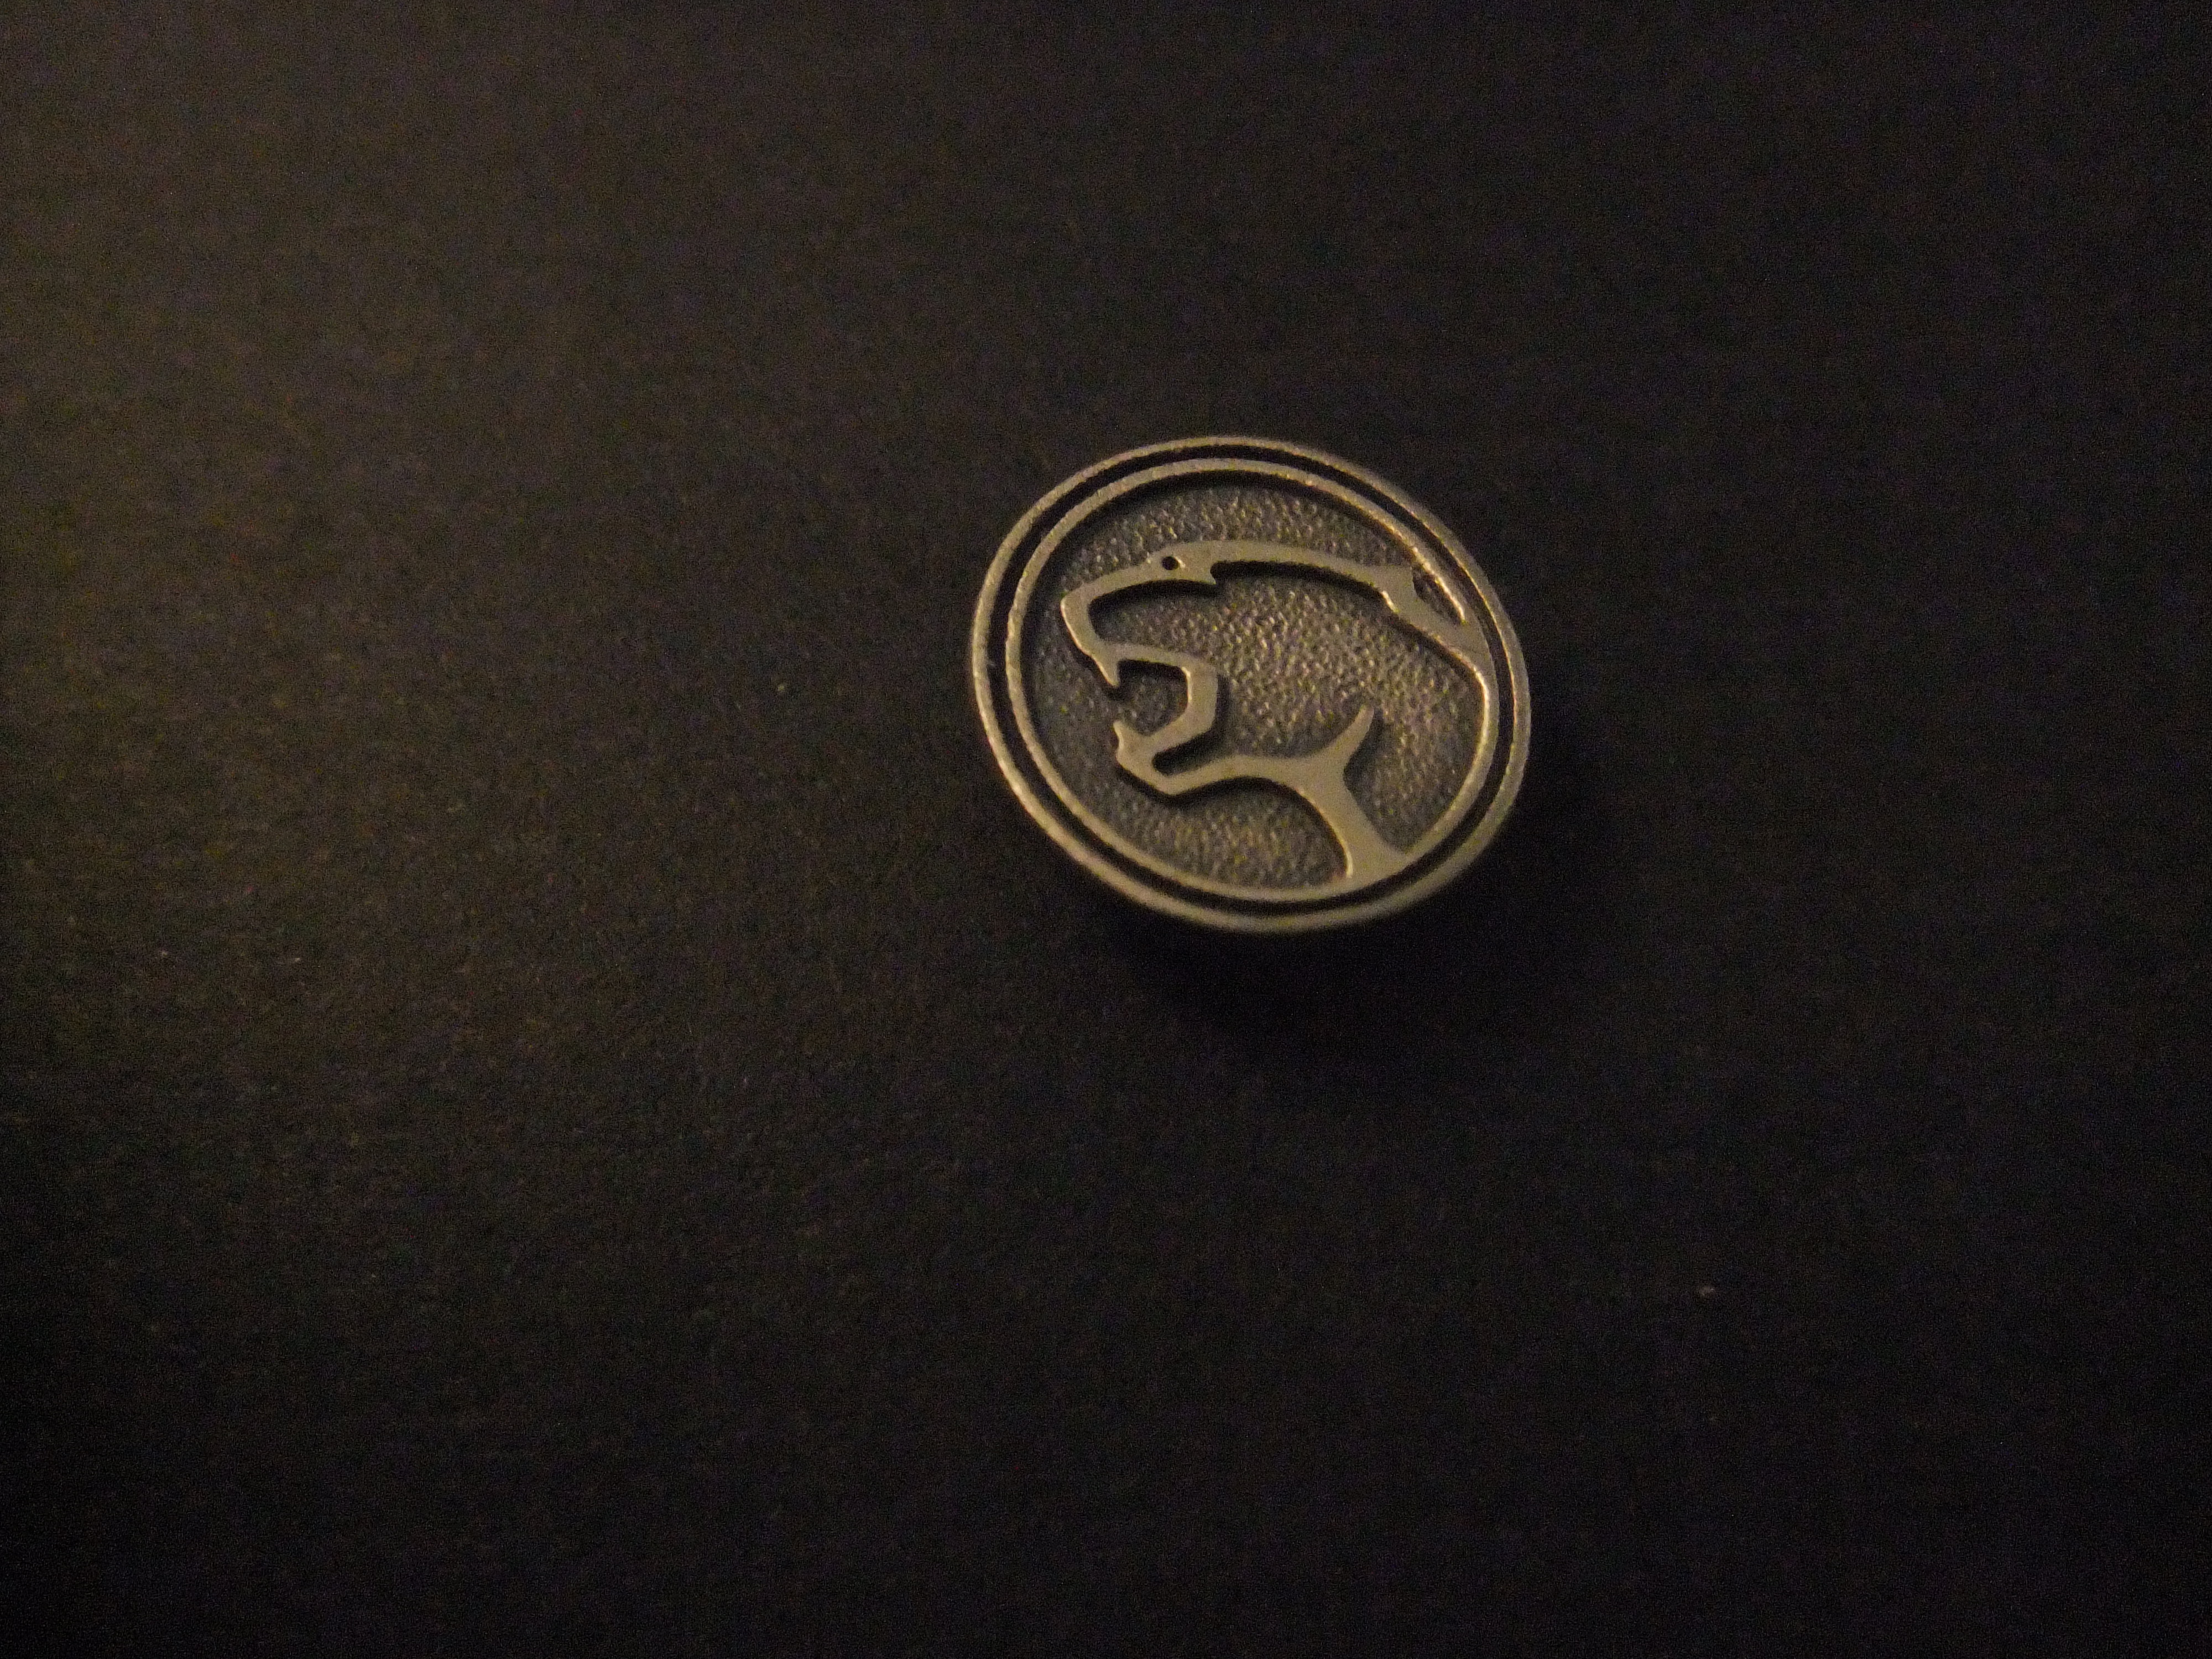 Ford Cougar ( Mercury Cougar,Verenigde Staten) logo zilverkleurig